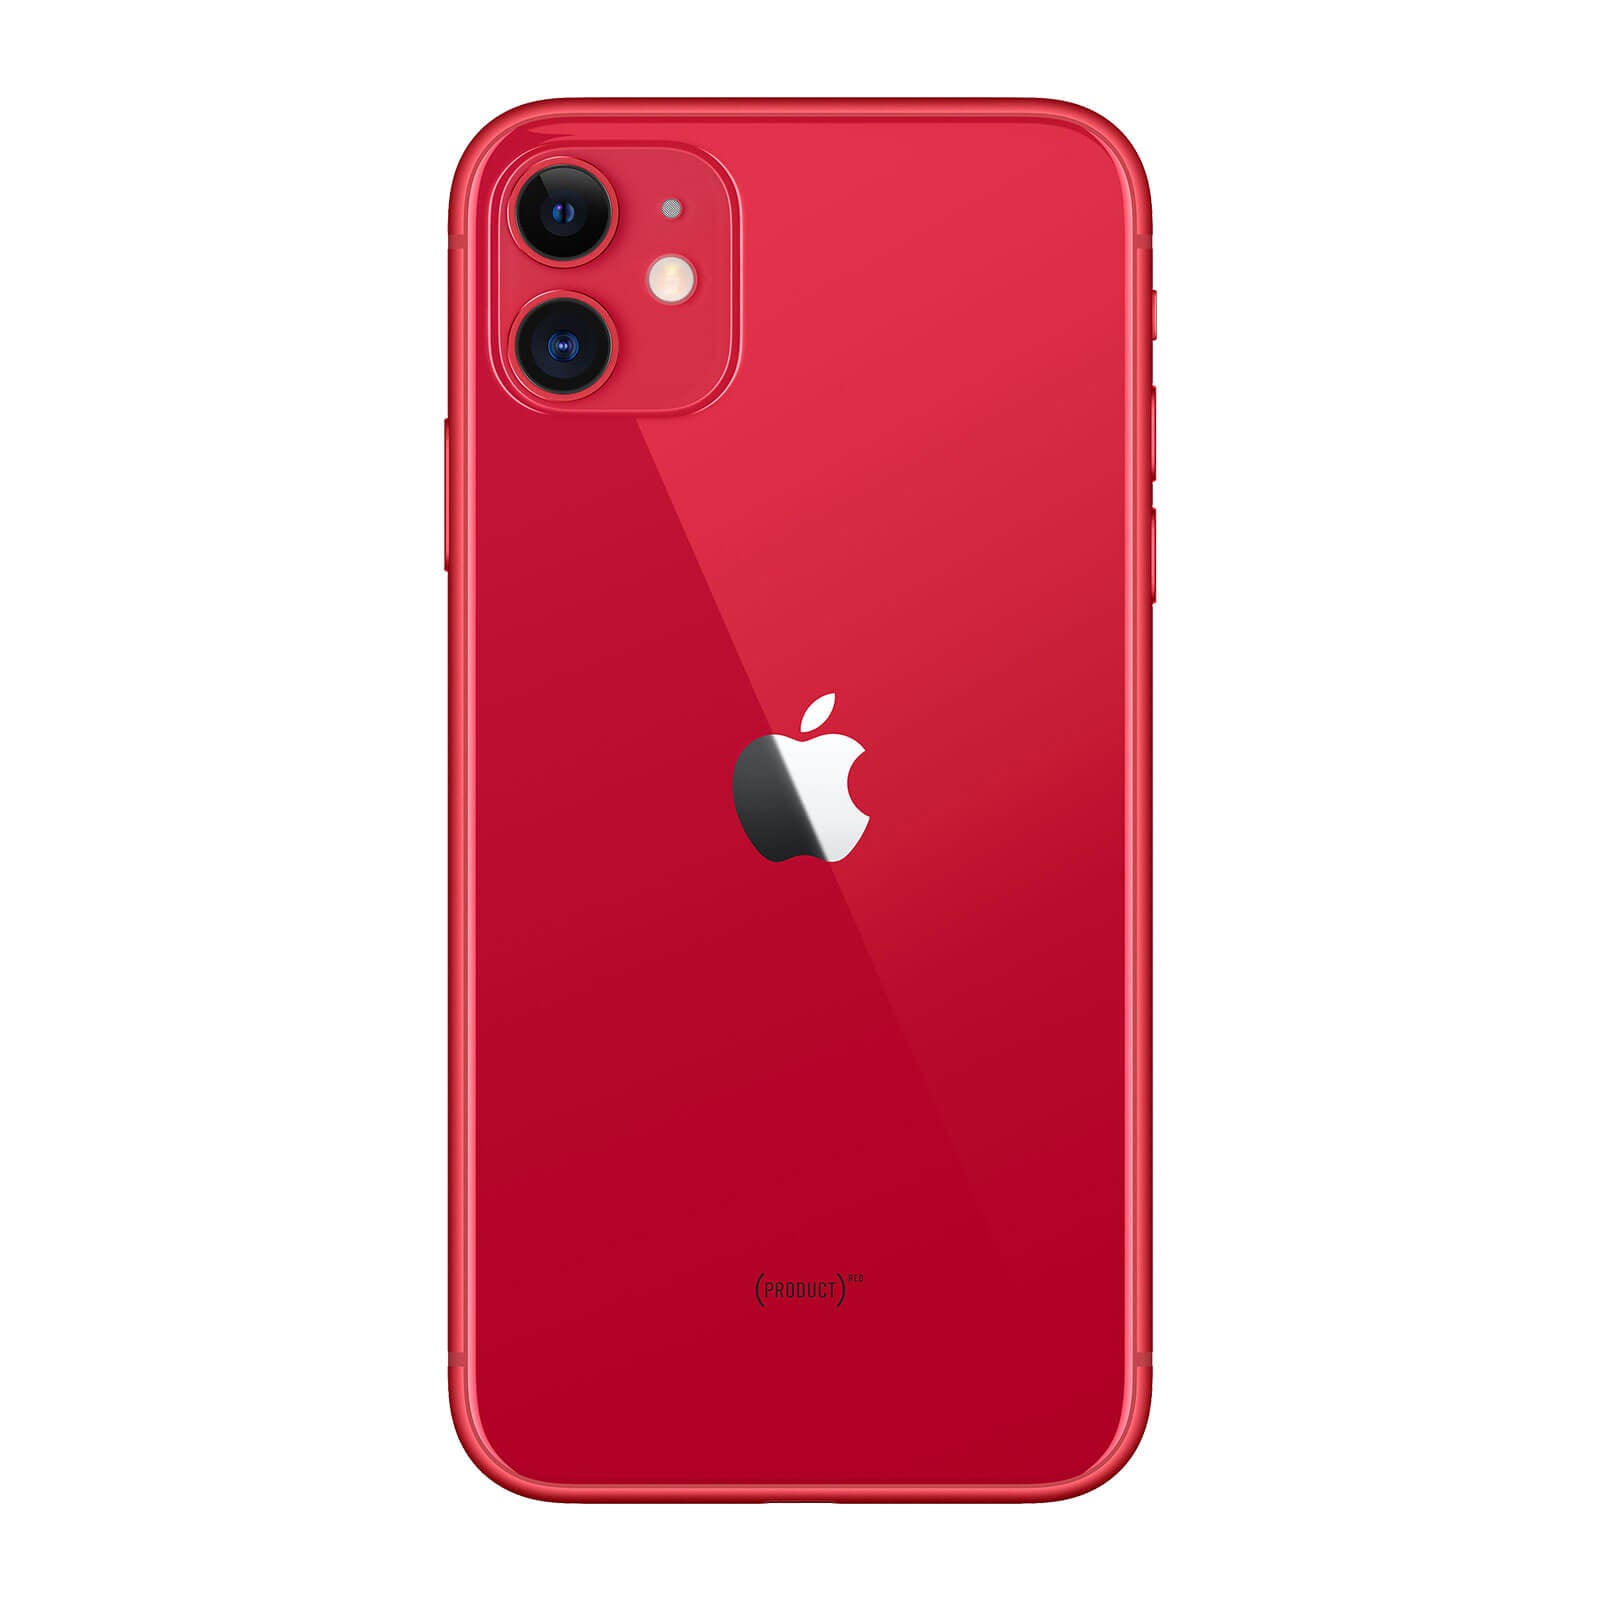 Apple iPhone 11 256GB Product Red Pristine - Unlocked